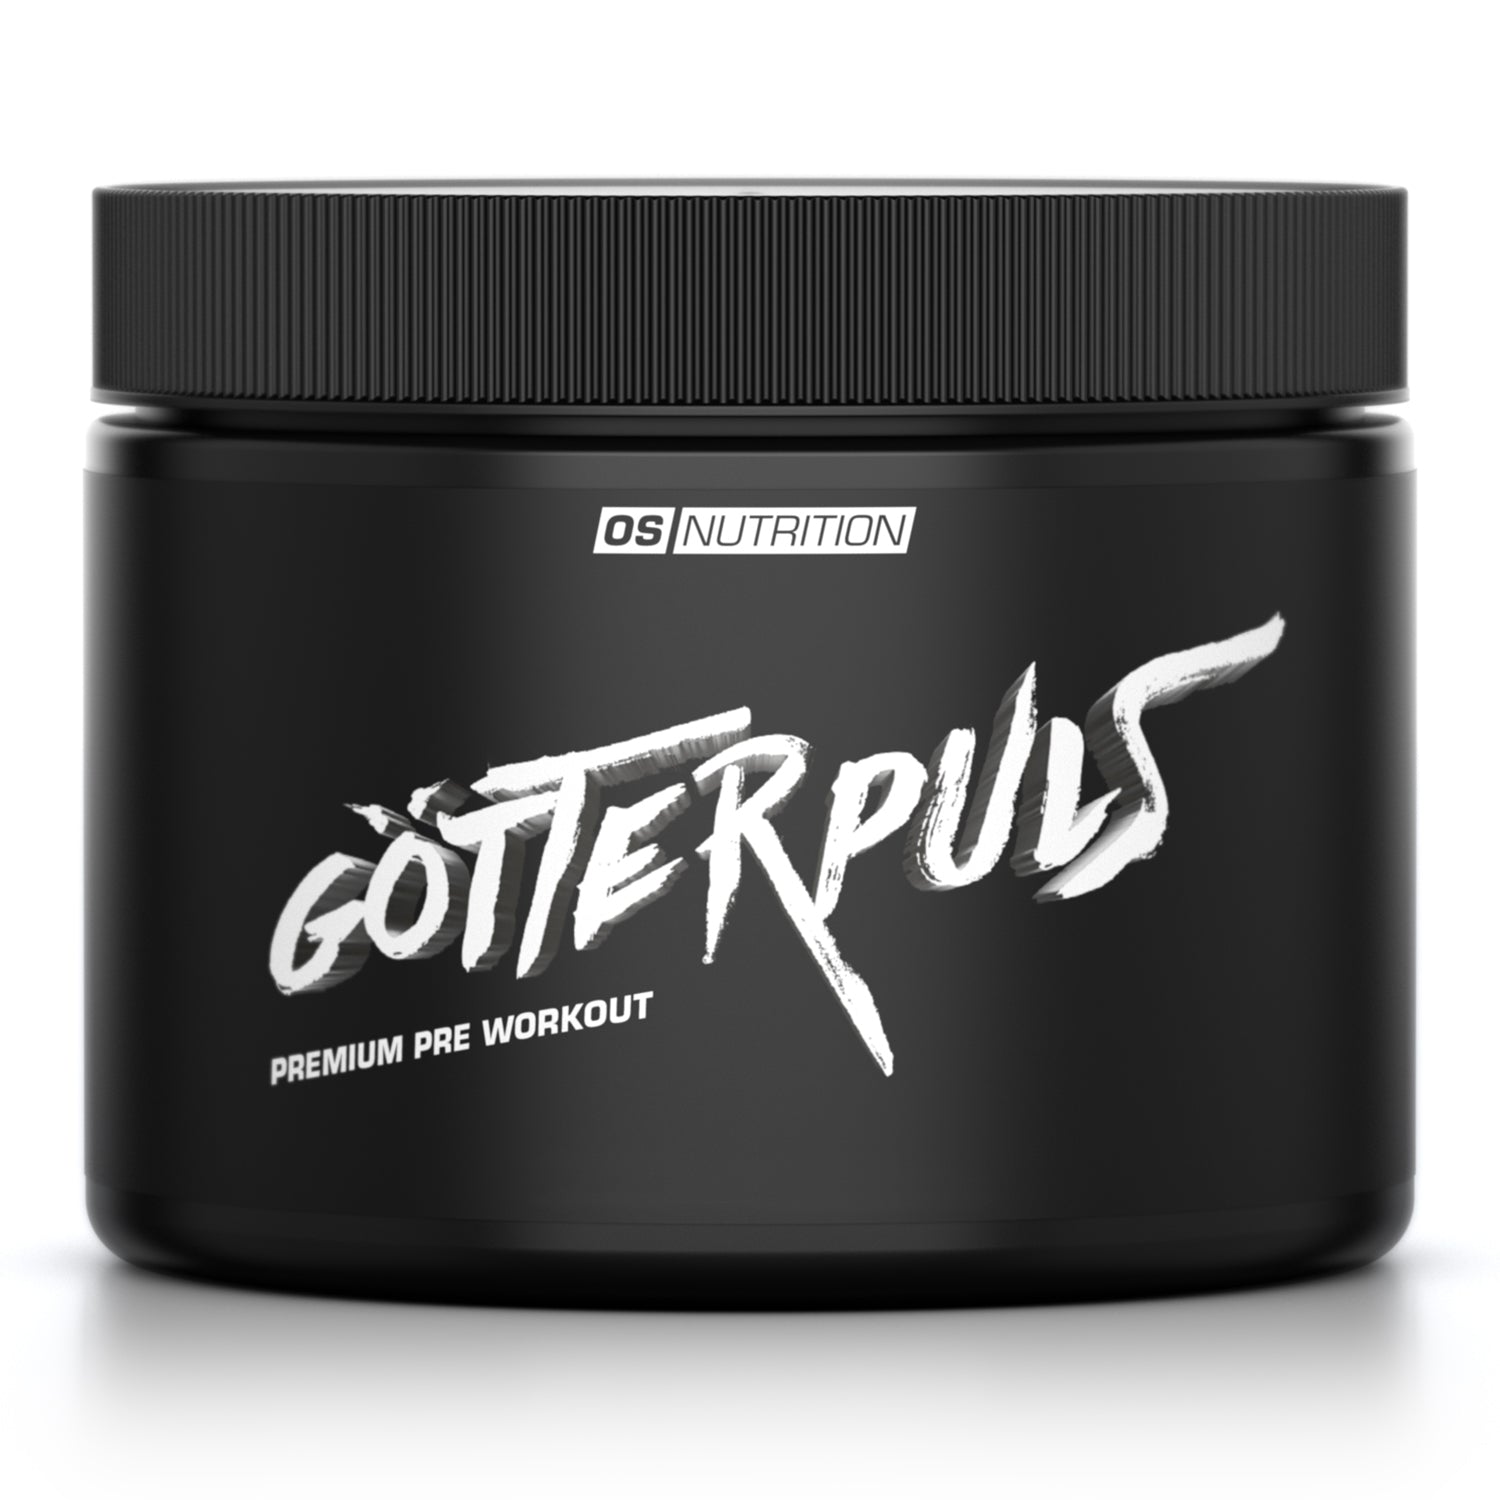 Götterpuls® - Premium Pre Workout 308 g - OS NUTRITION